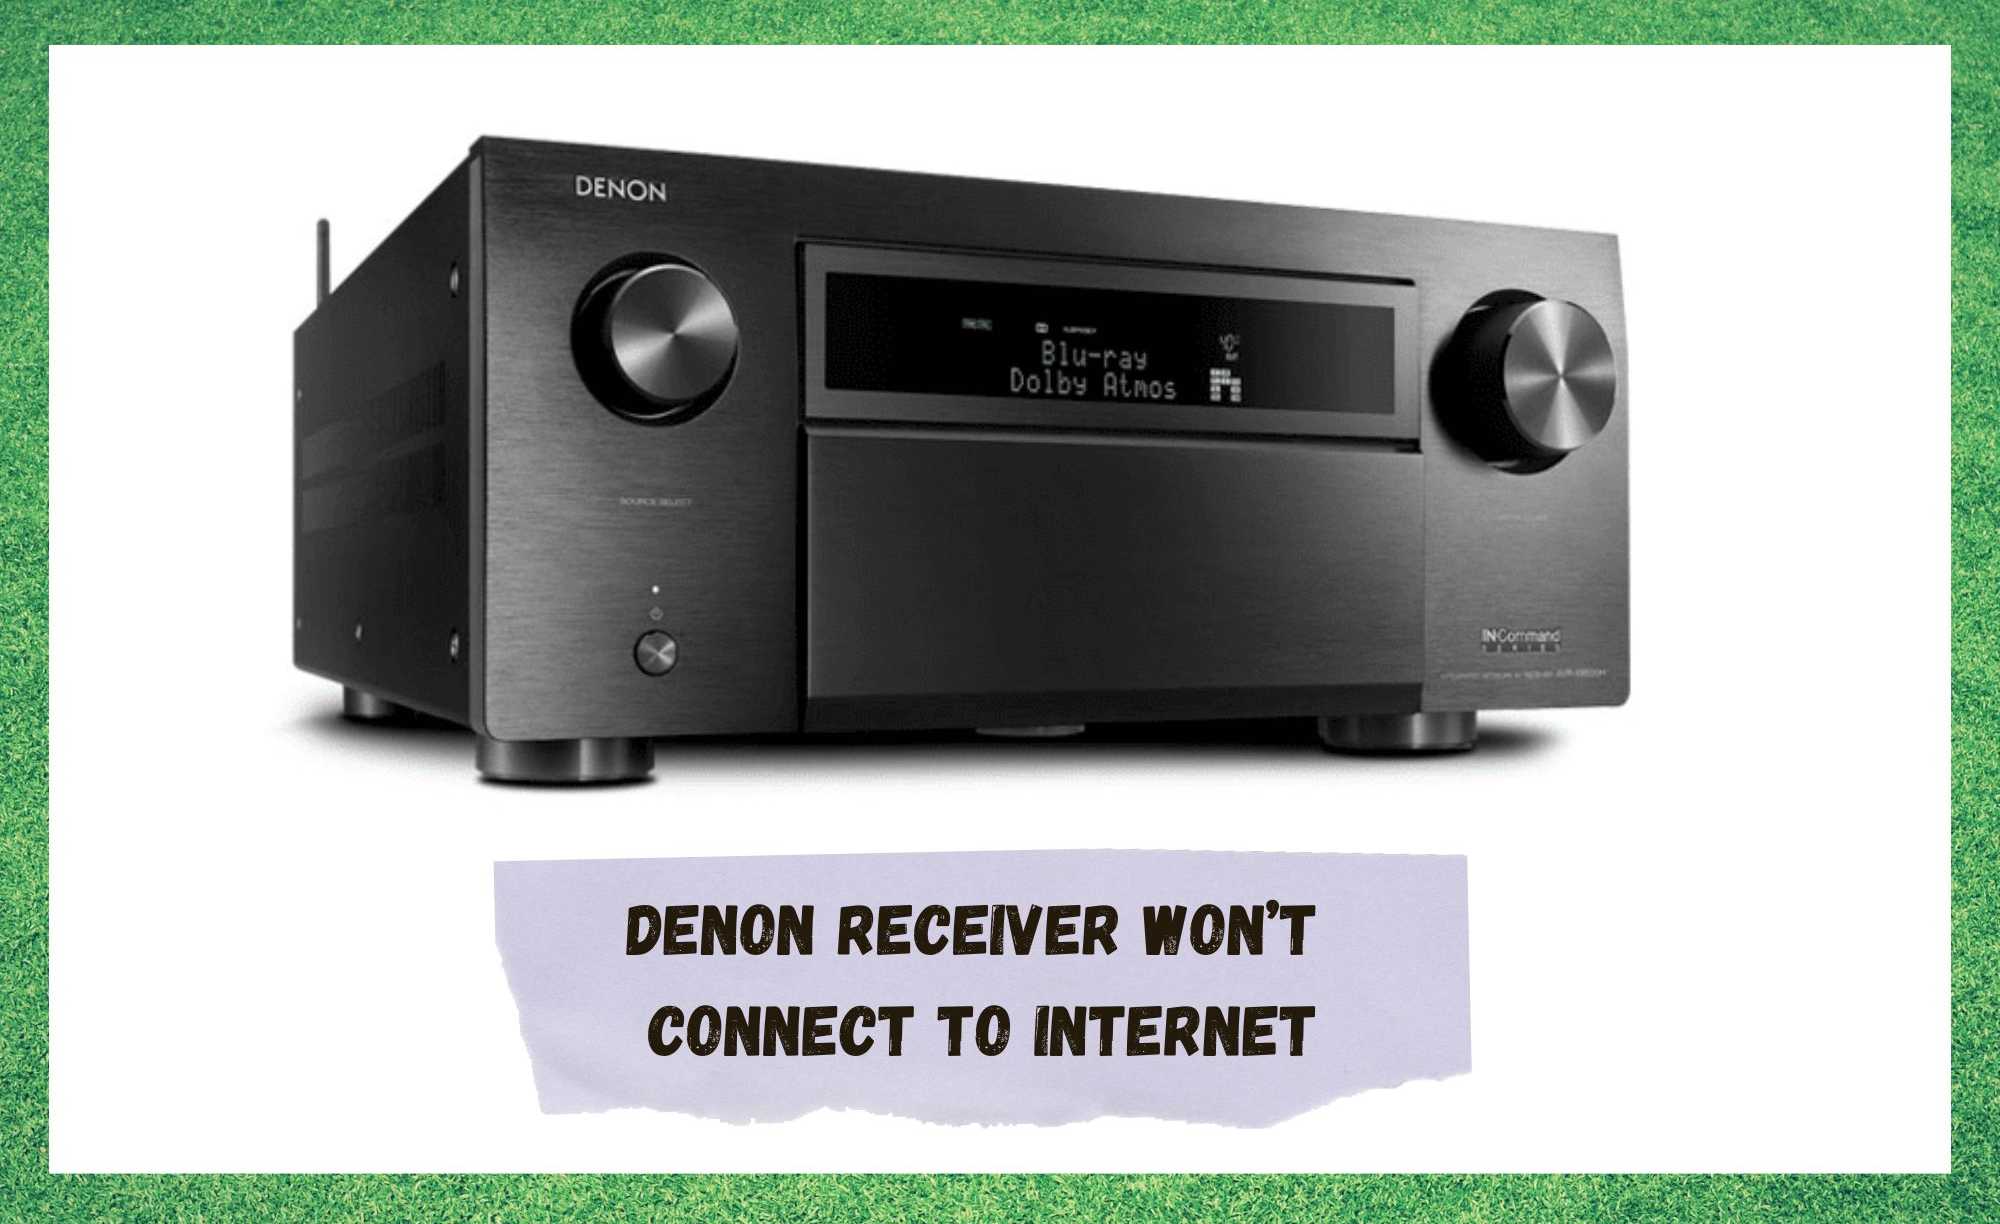 denon receiver won't connect to internet